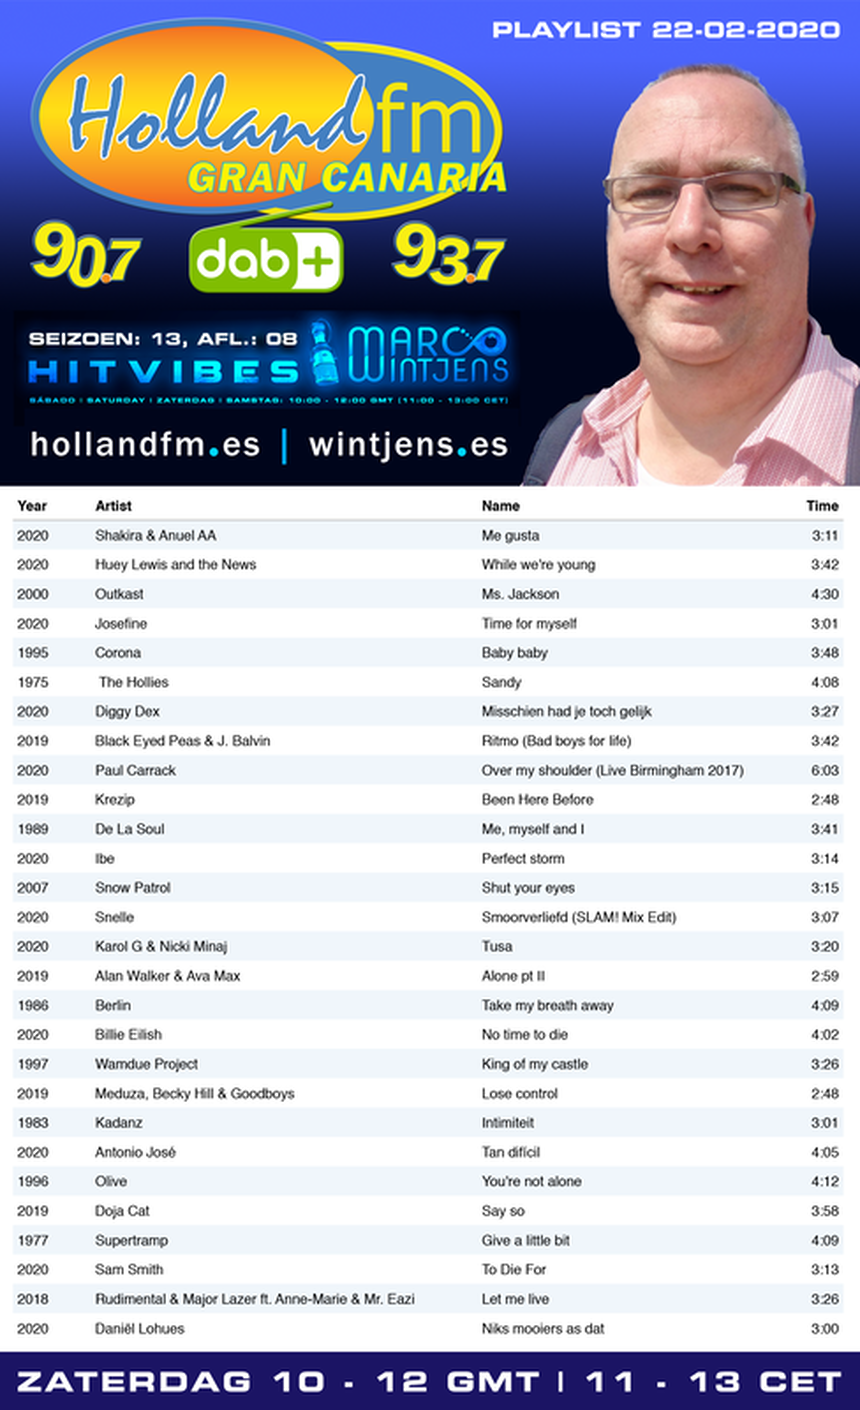 Playlist HitVibes, 22-02-2020, Marco Wintjens, Holland FM, Gran Canaria